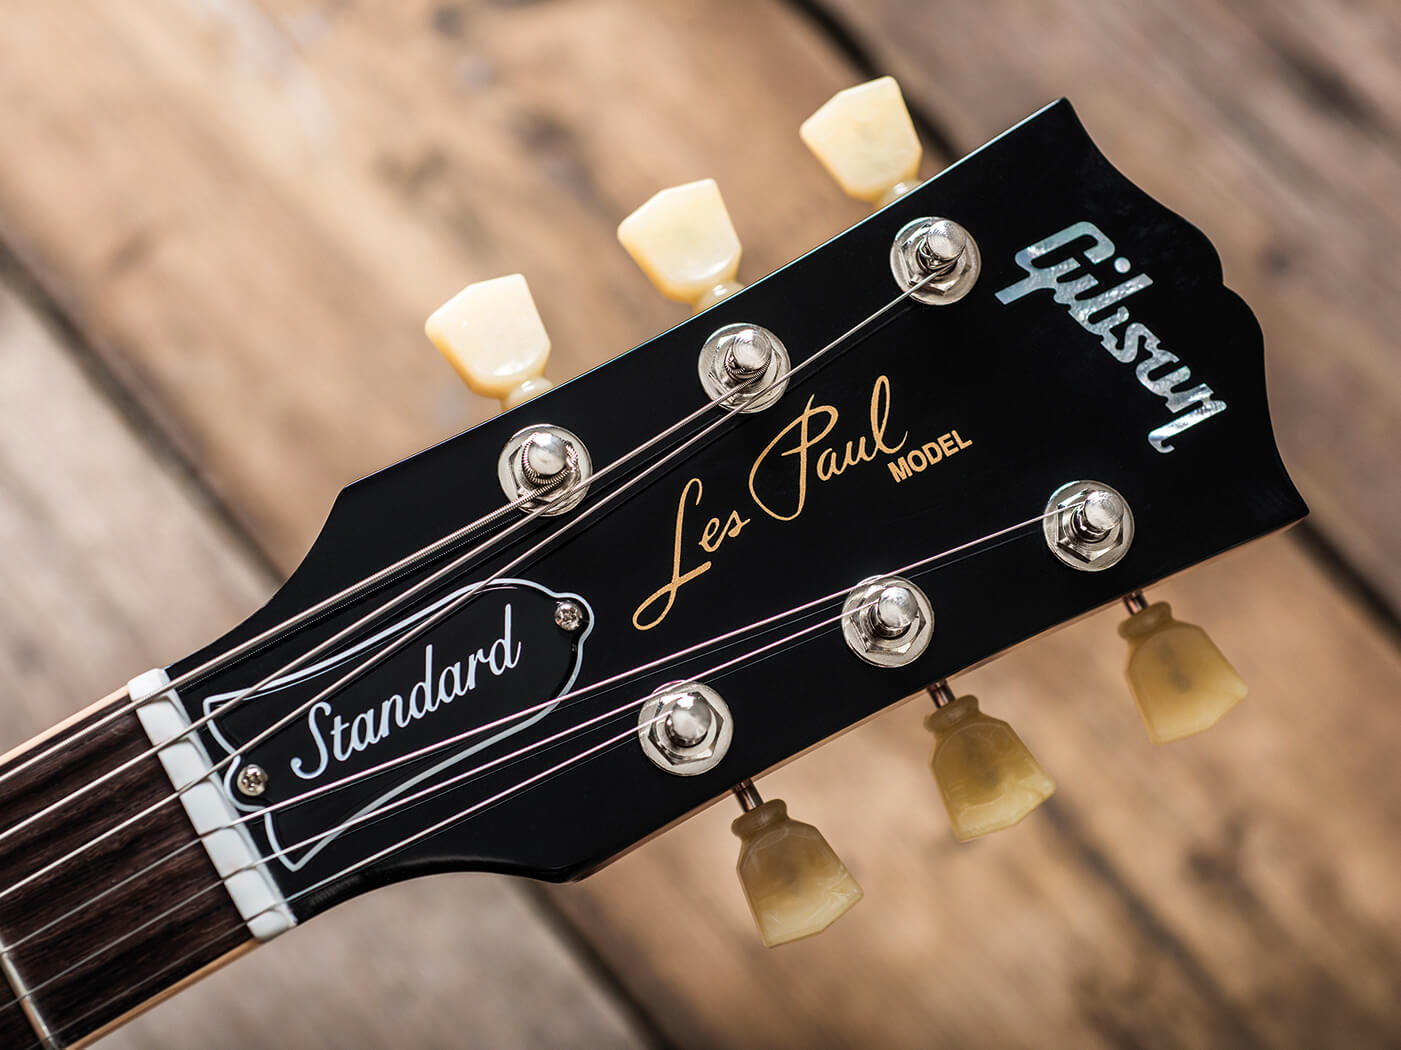 Gibson Les Paul Standard ’50s & Les Paul Tribute